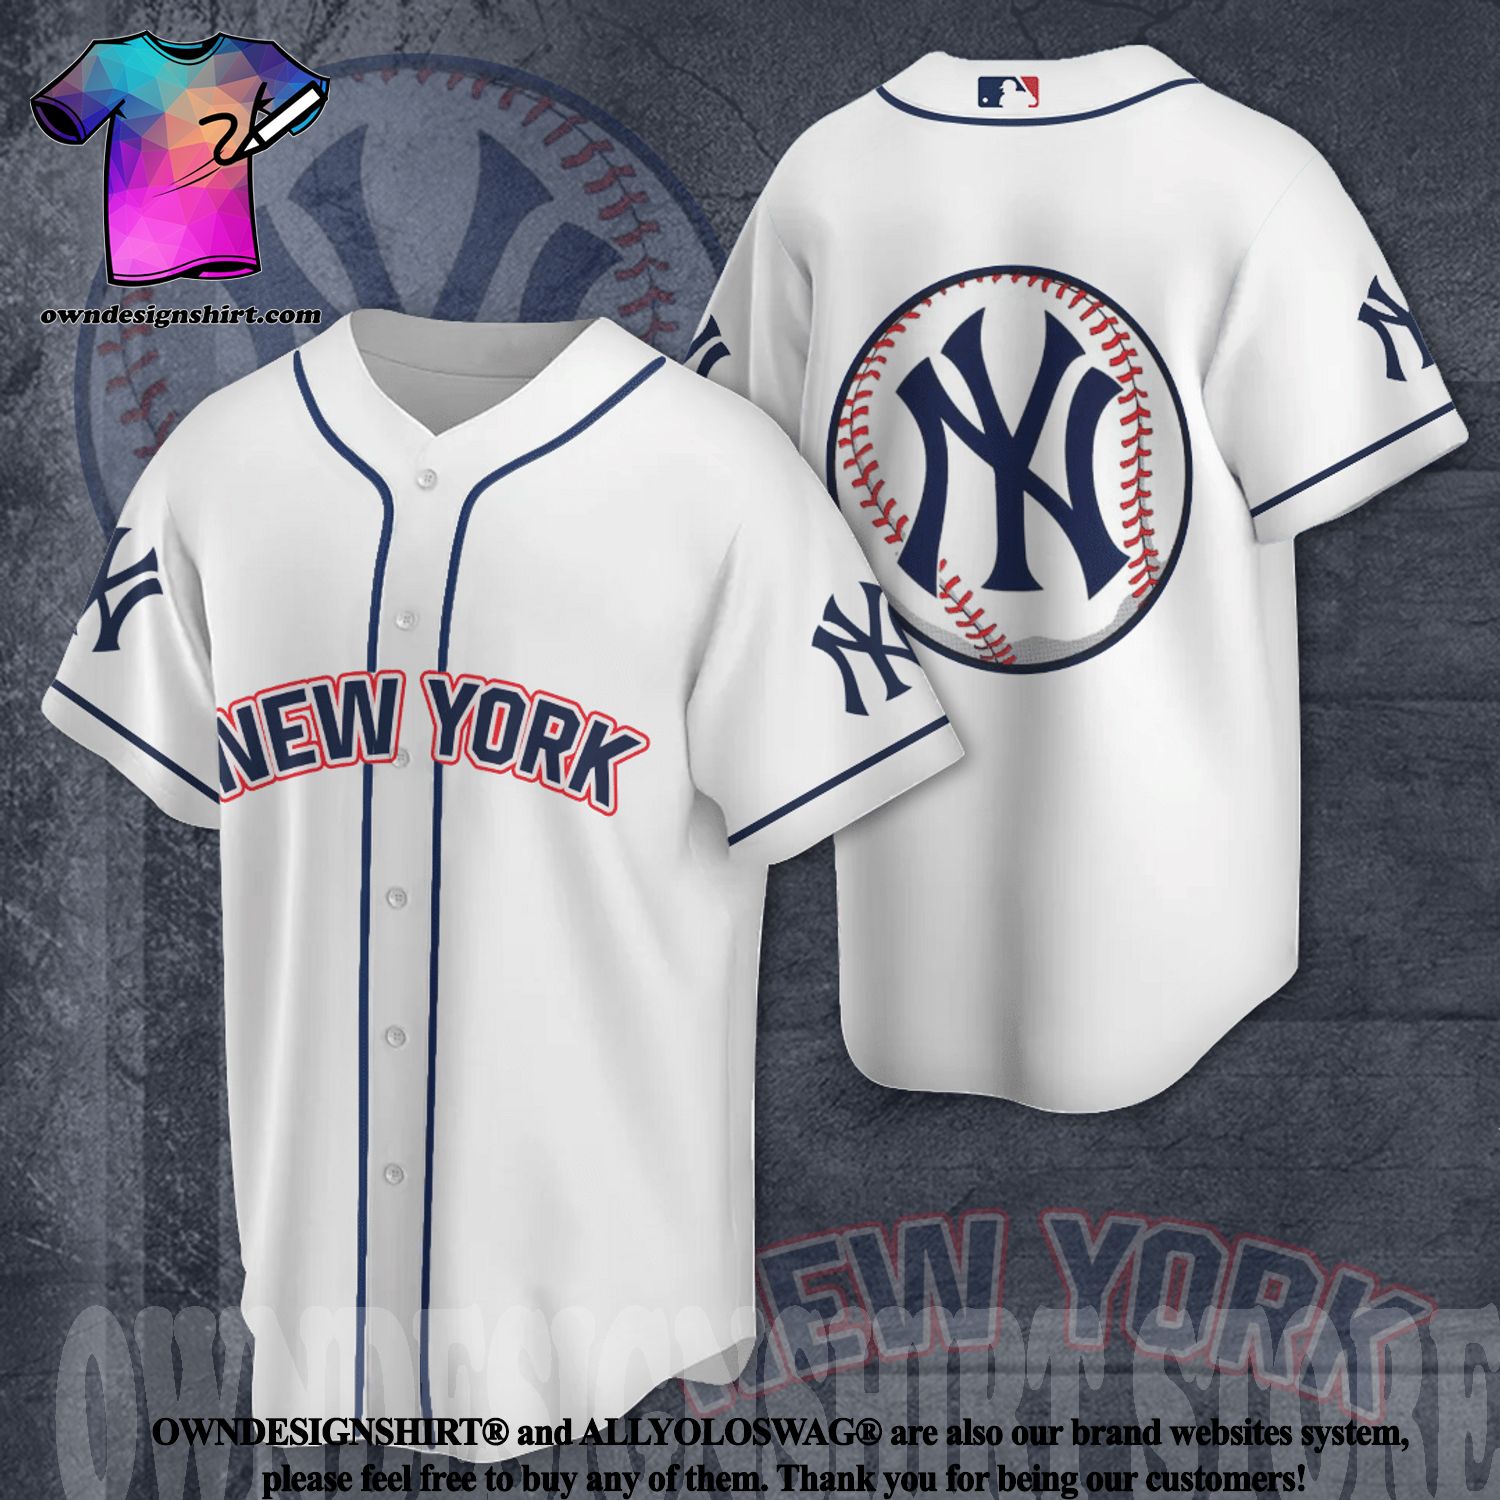 New York Yankees Baseball Team Full Printed Jersey Shirt-White